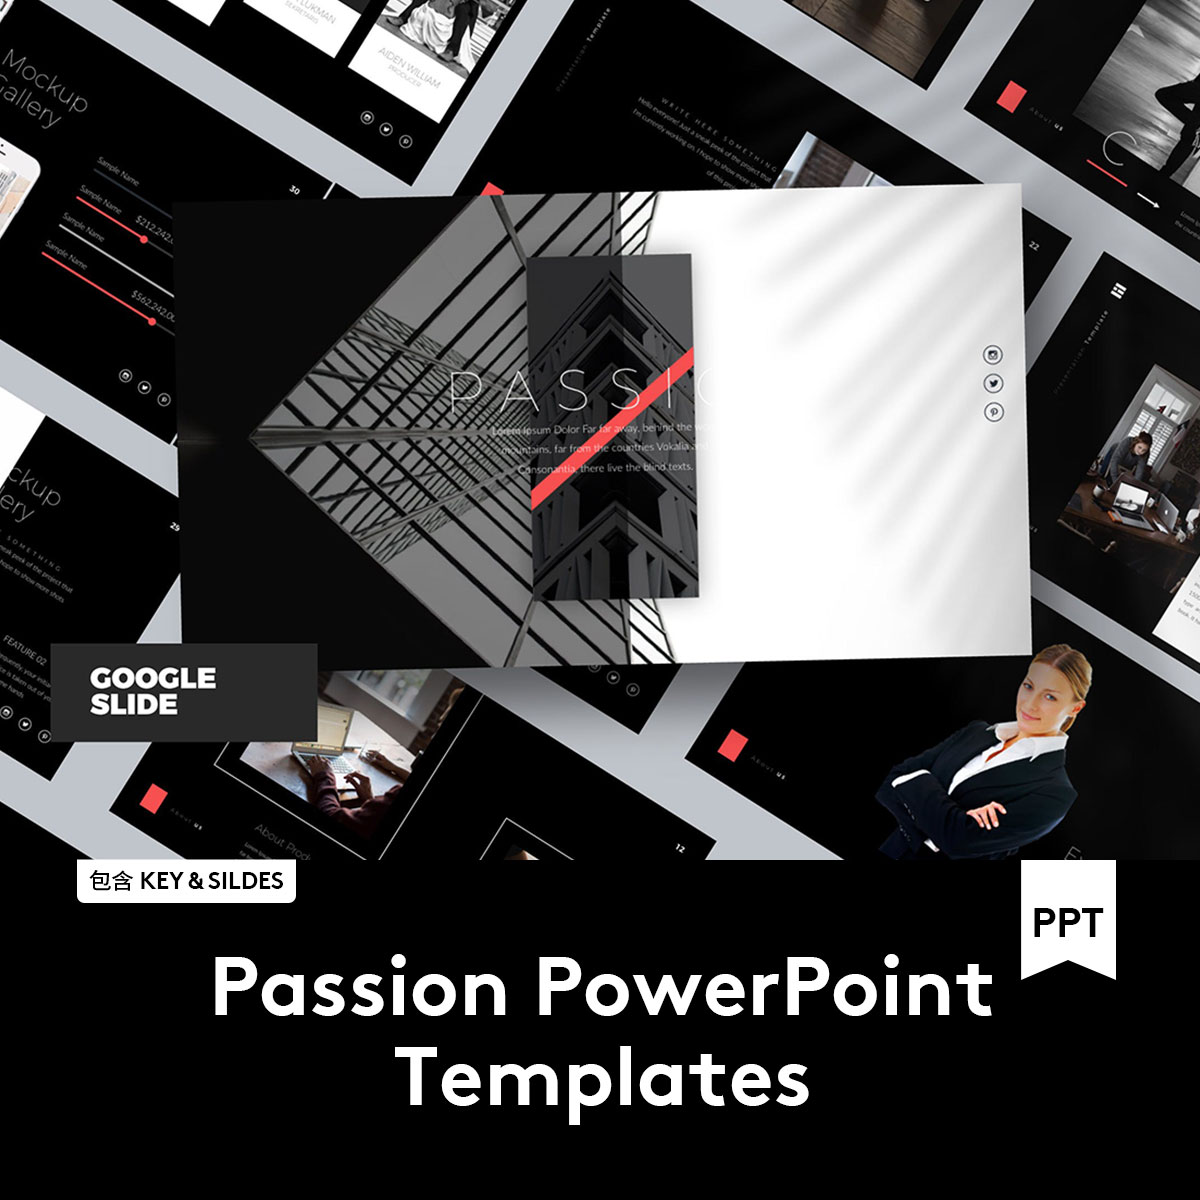 Passion Templates 黑色潮流商业策划PPT幻灯片模板 P